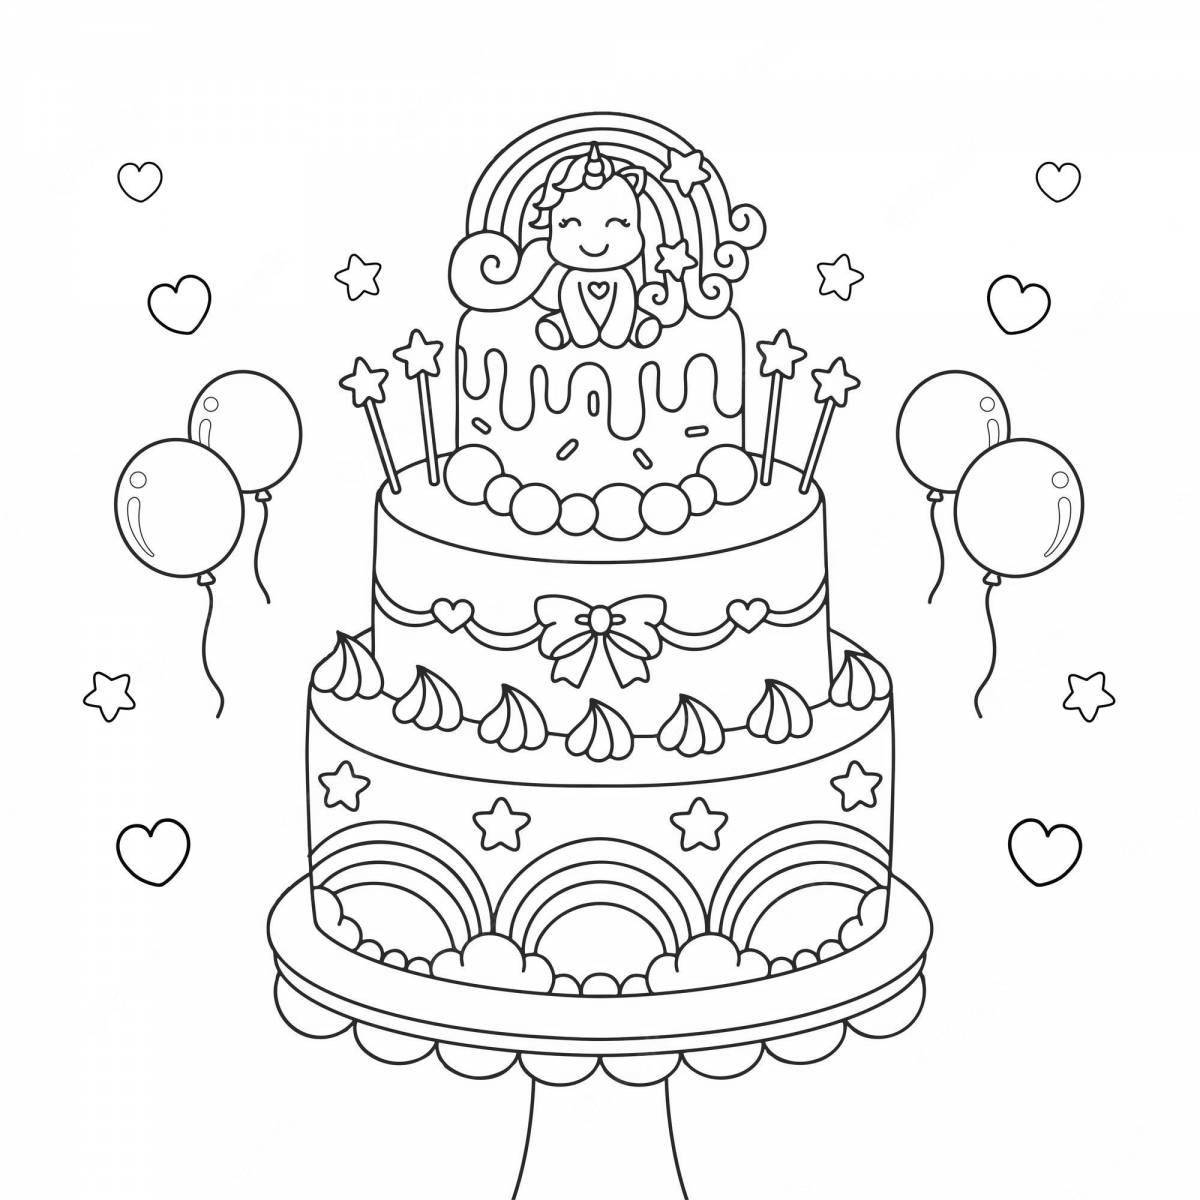 Color-frenzy cake coloring page для детей 3-4 лет